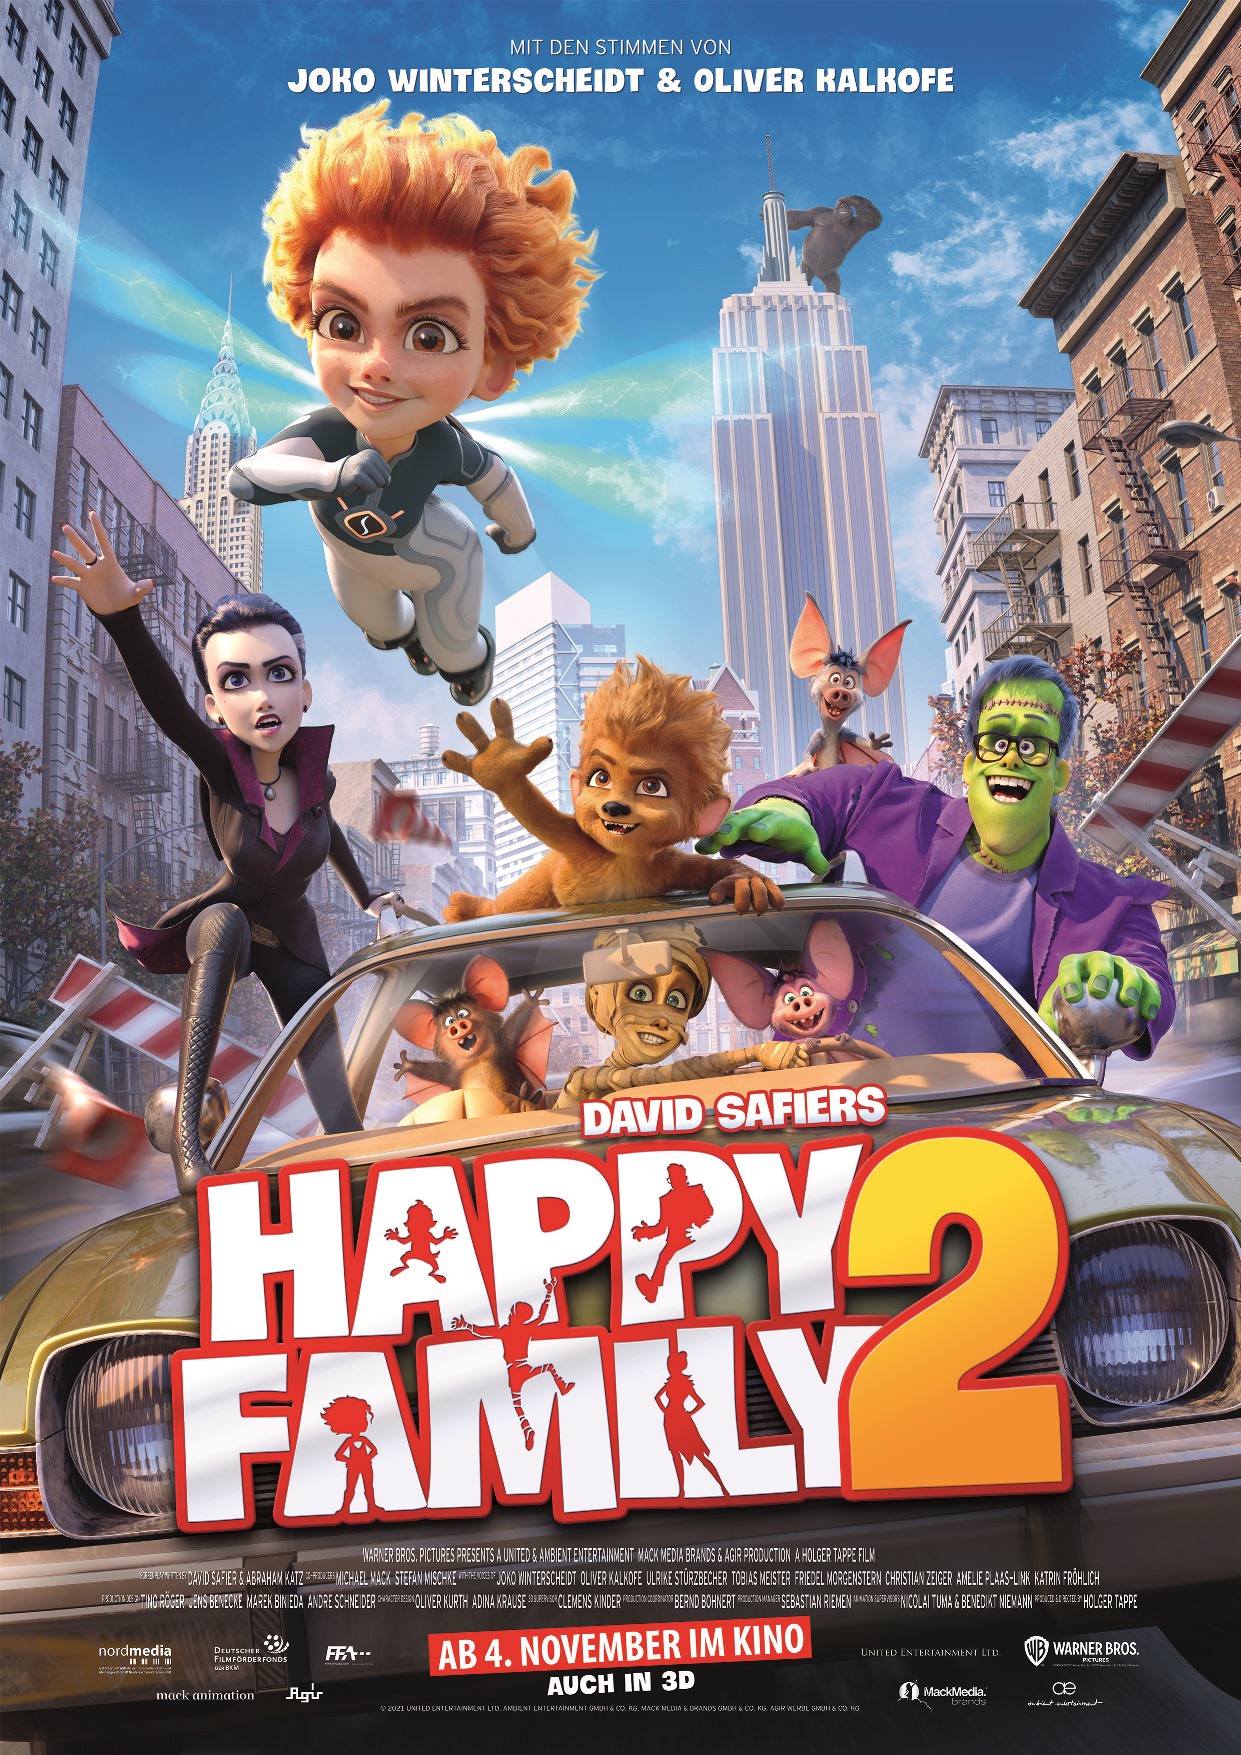 Stiahni si Filmy bez titulků Priserakovi 2 / Happy Family 2 (2021)(EN)[1080p] 